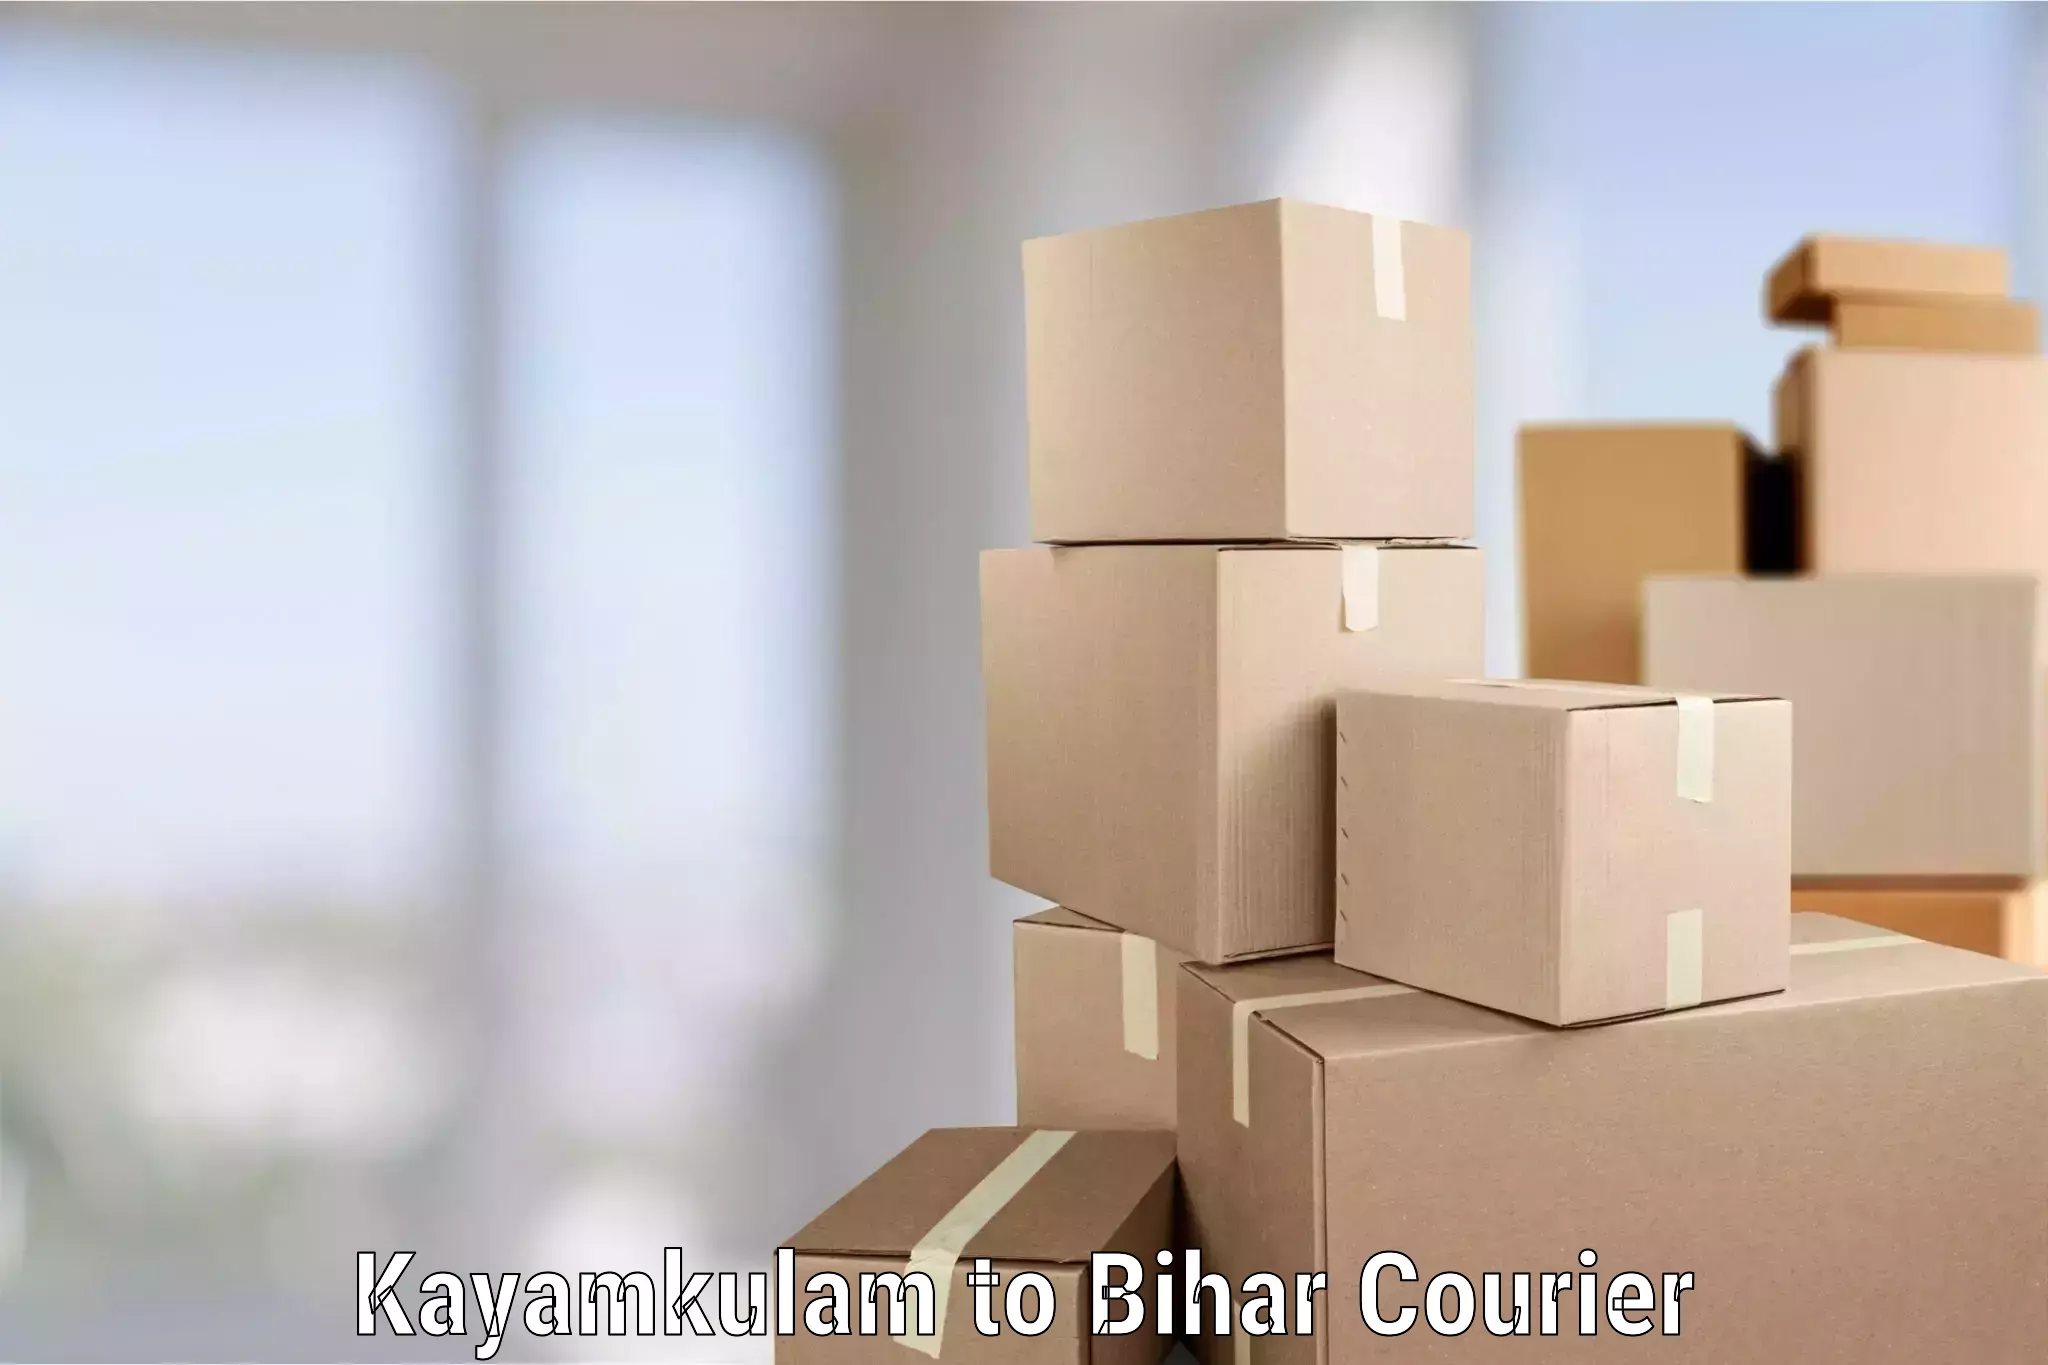 Trusted household movers Kayamkulam to Bihar